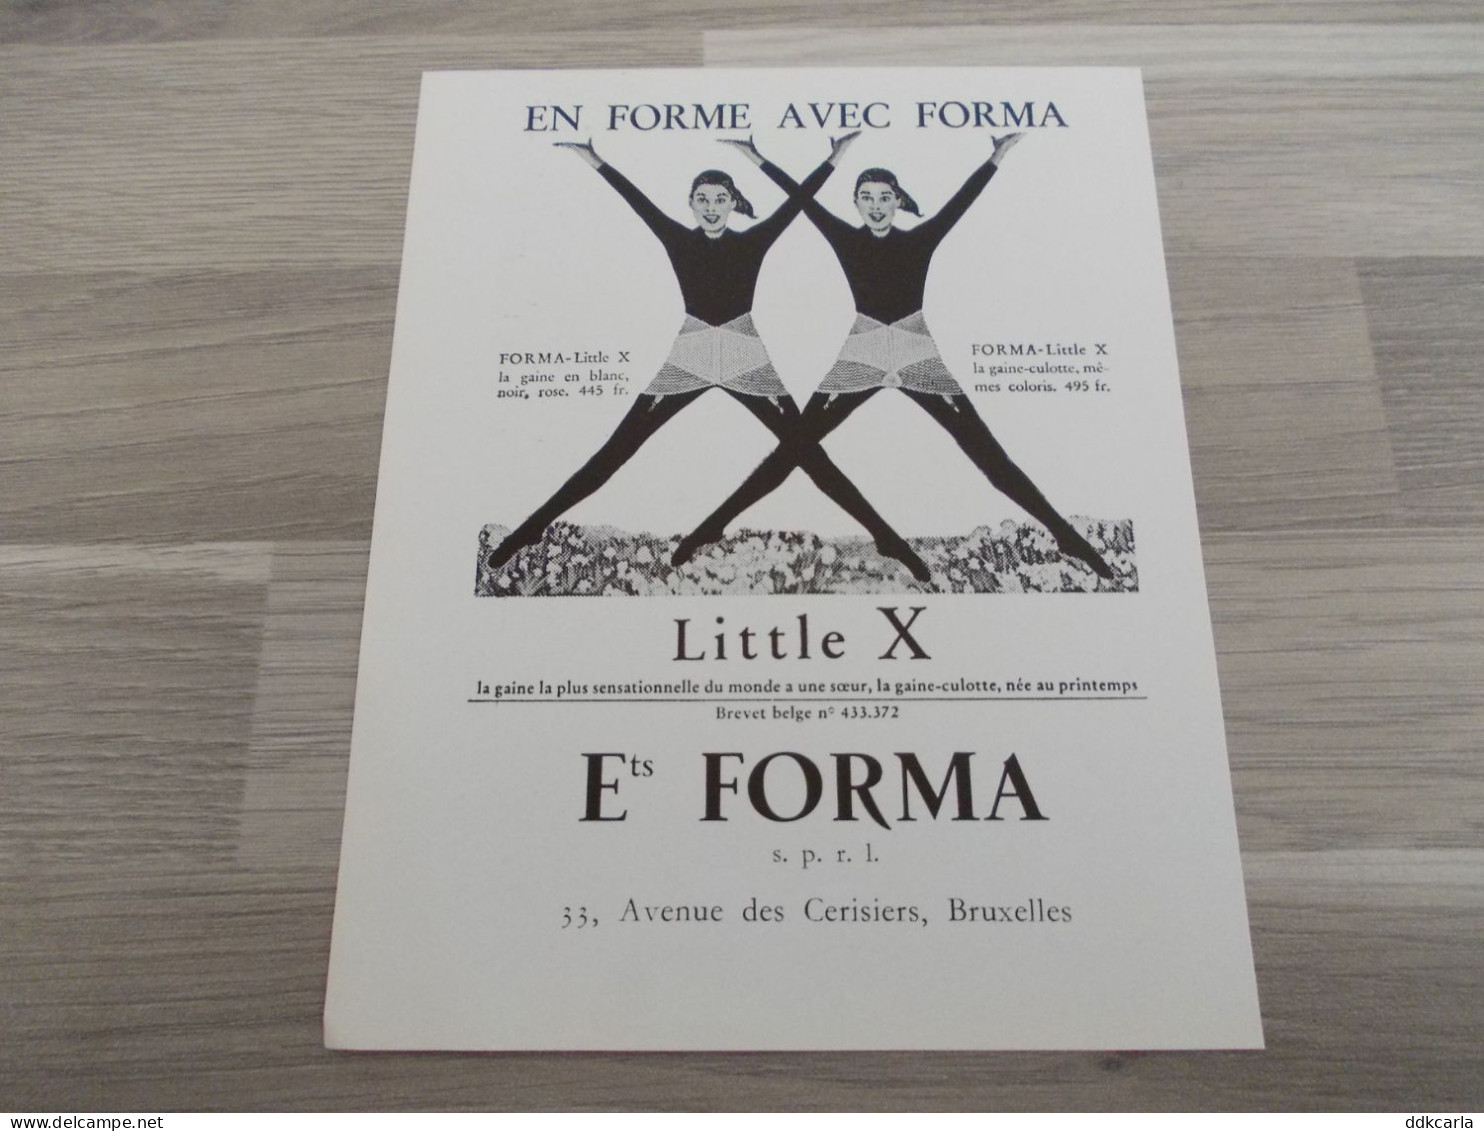 Reclame Advertentie Uit Oud Tijdschrift 1957 - En Forme Avec FORMA Gaines - Little X Gaine Et Gaine-culotte - Werbung